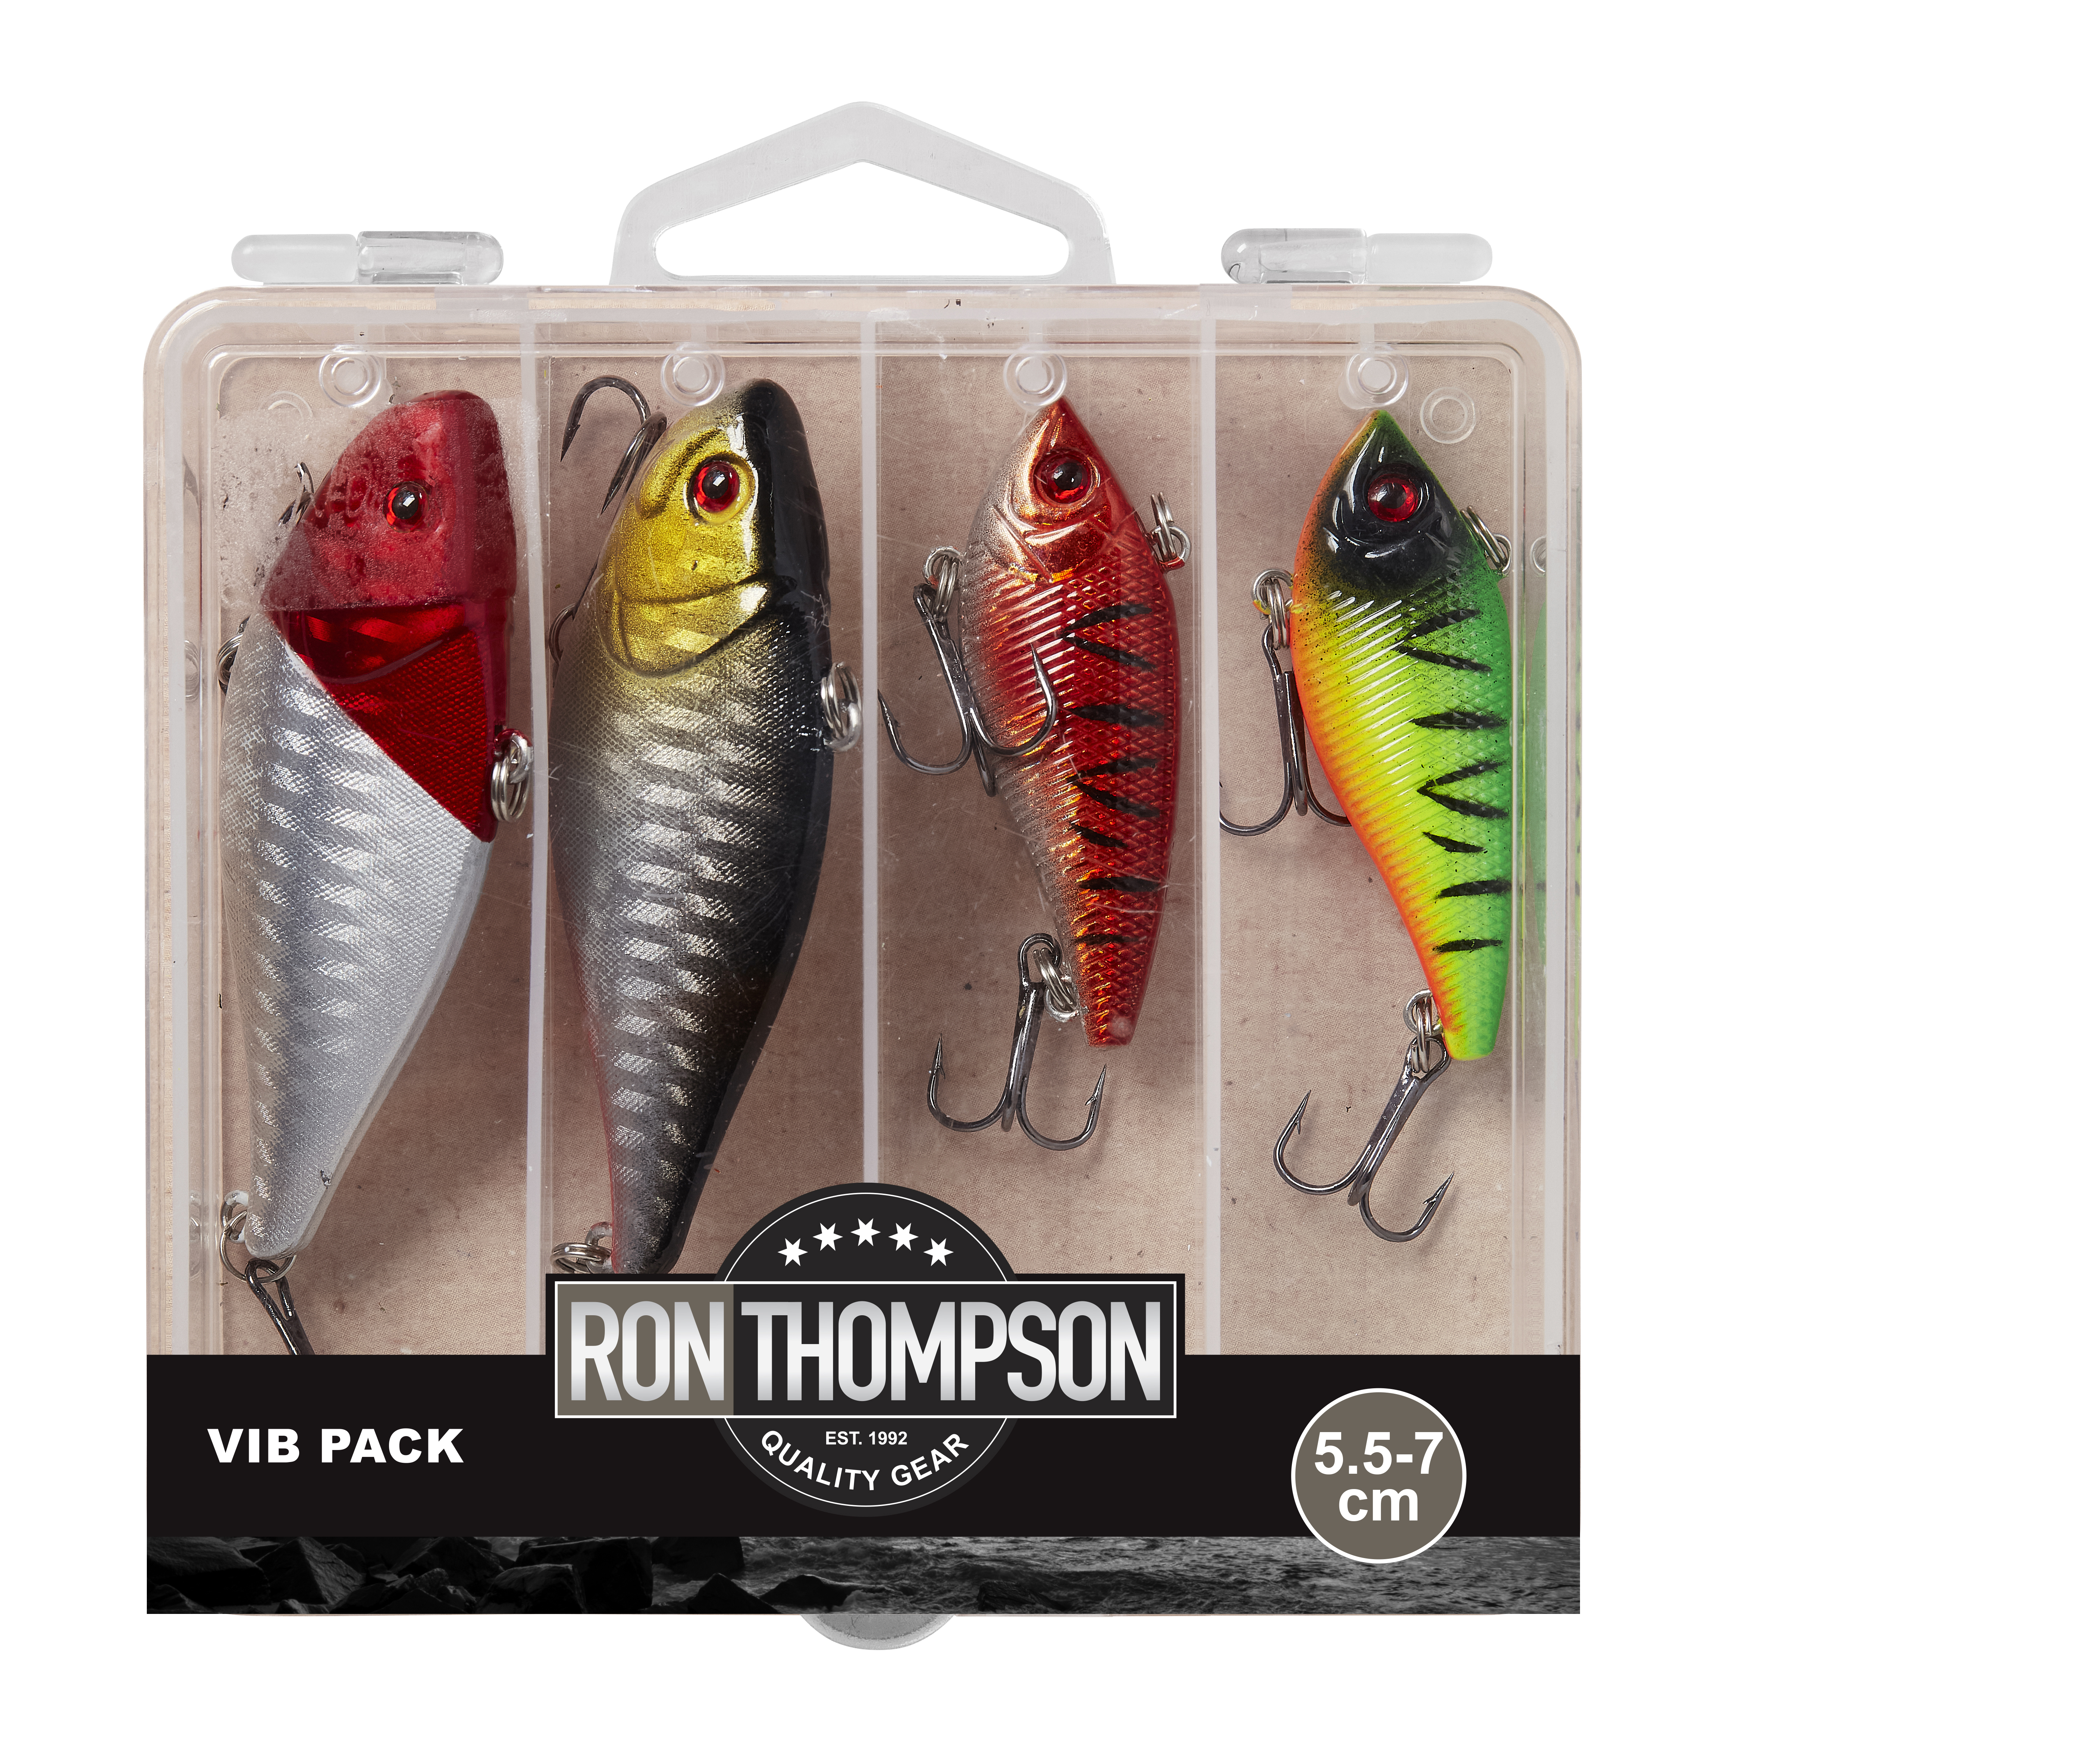 Ron Thomson Sada VIB Pack 5.5-7cm